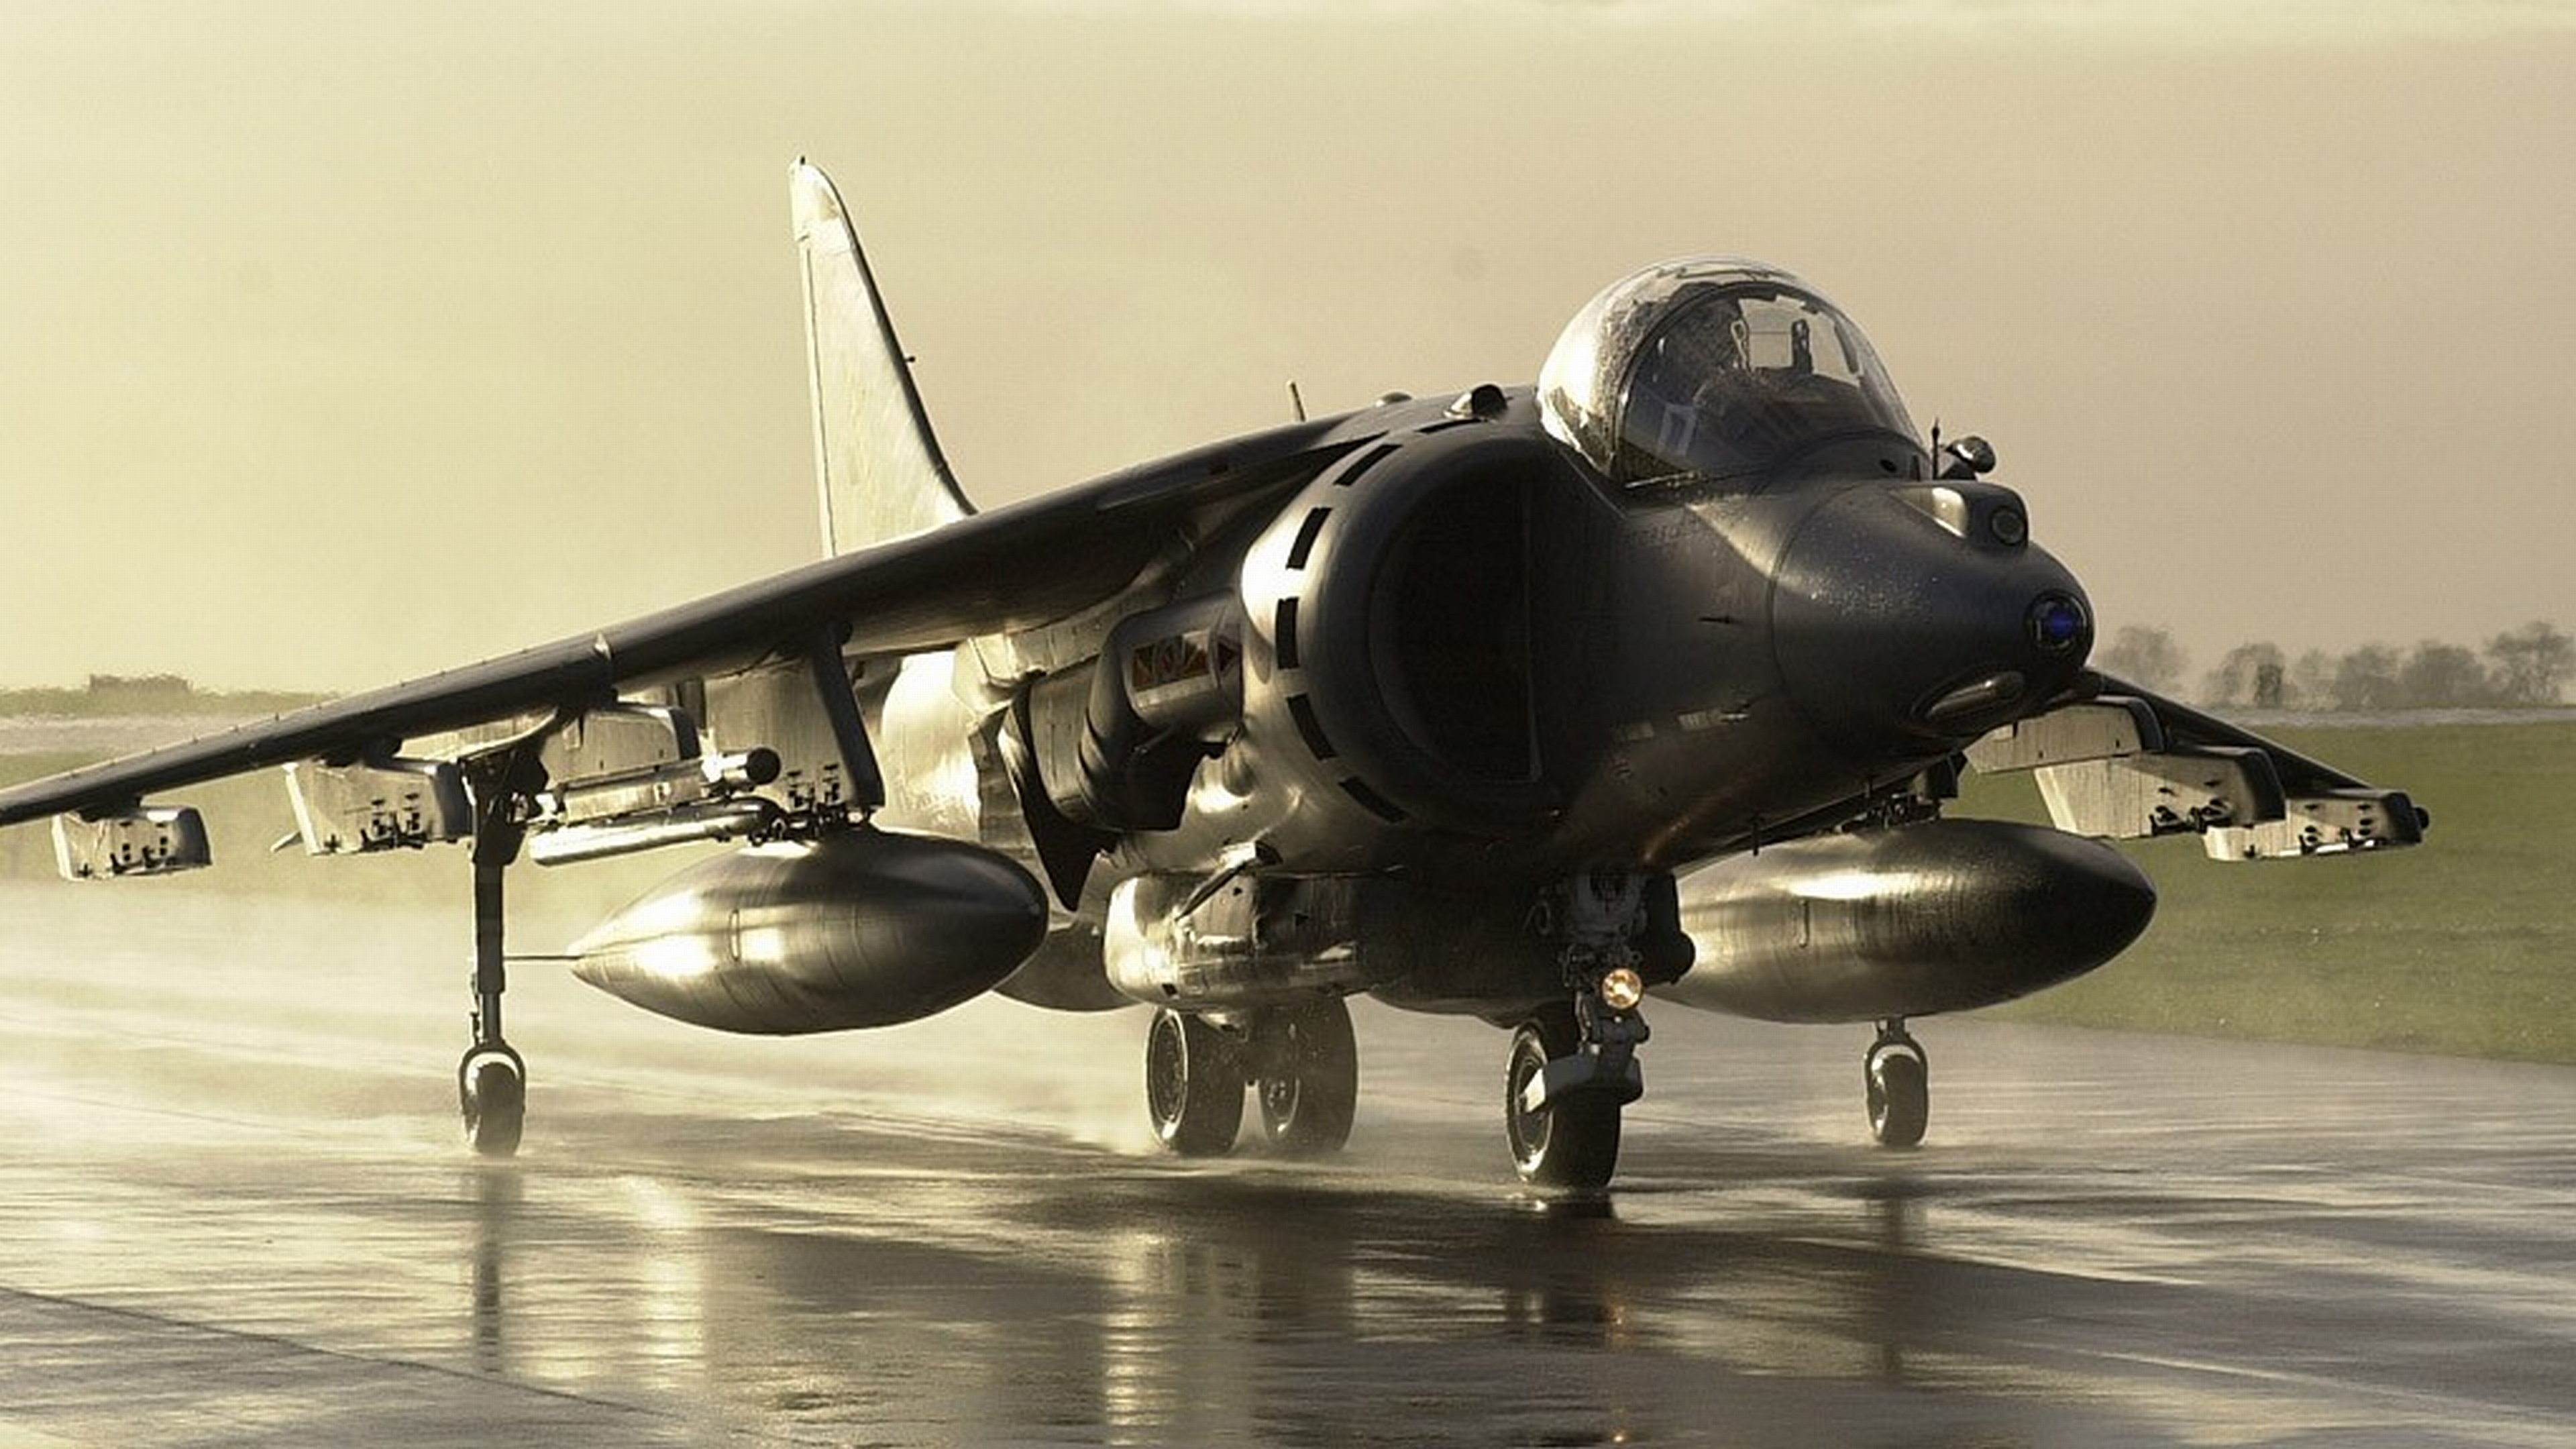 Harrier jump jet. Source - Net.